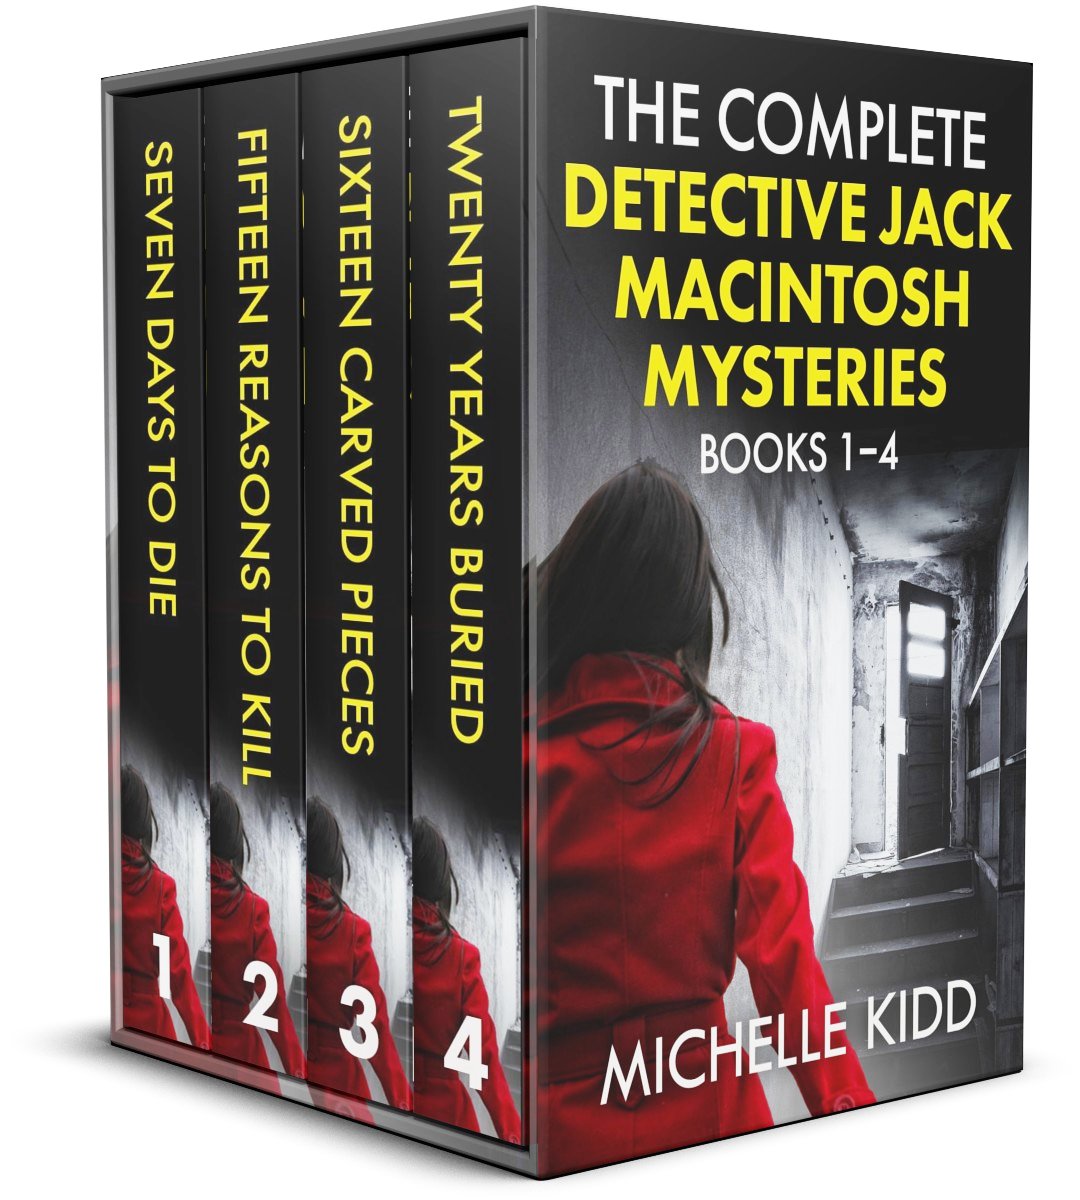 COMPLETE DETECTIVE JACK MACINTOSH BOOKS cover publish.jpg